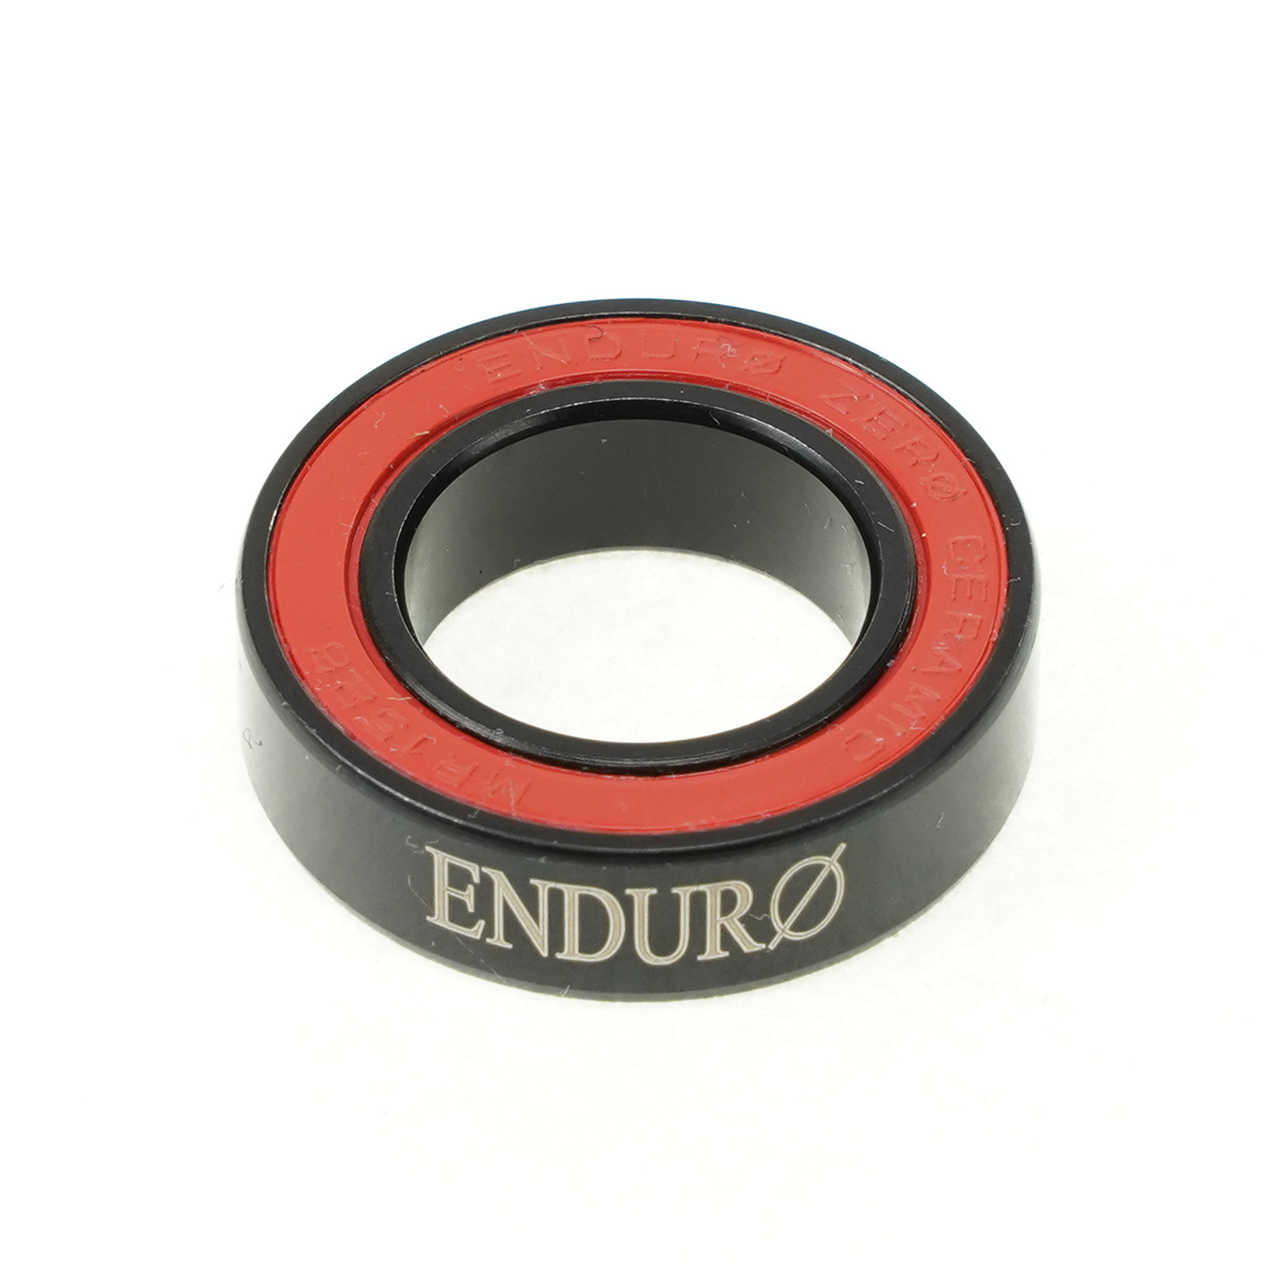 Enduro CO 15268 VV - Enduro Zero, Black-Oxide, Ceramic Hybrid, ABEC-5, Radial Bearing (C3 Clearance) - 15mm x 26mm x 8mm